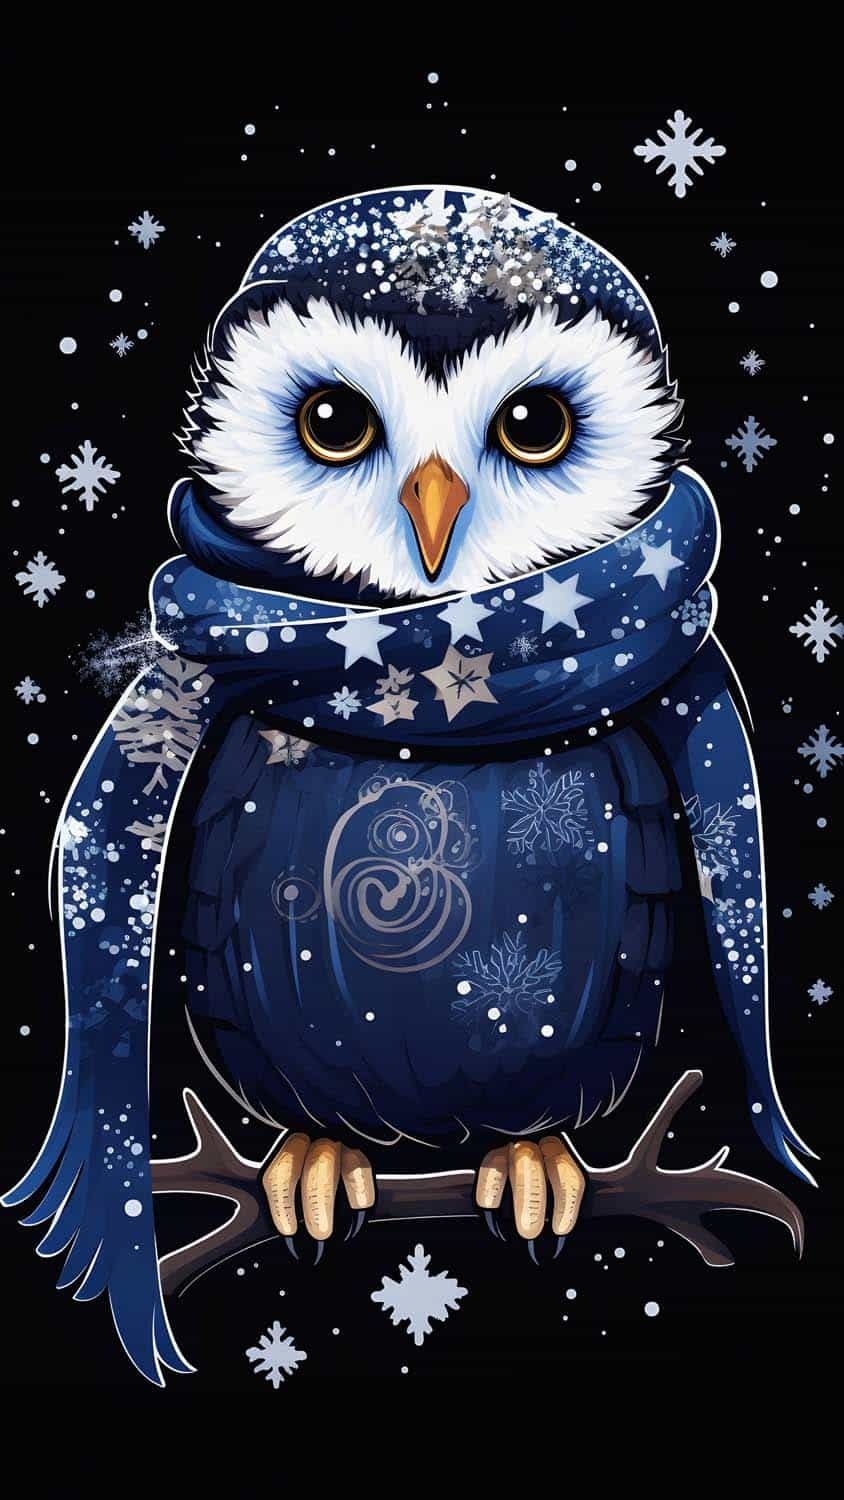 Winter Owl iPhone Wallpaper  iPhone Wallpapers